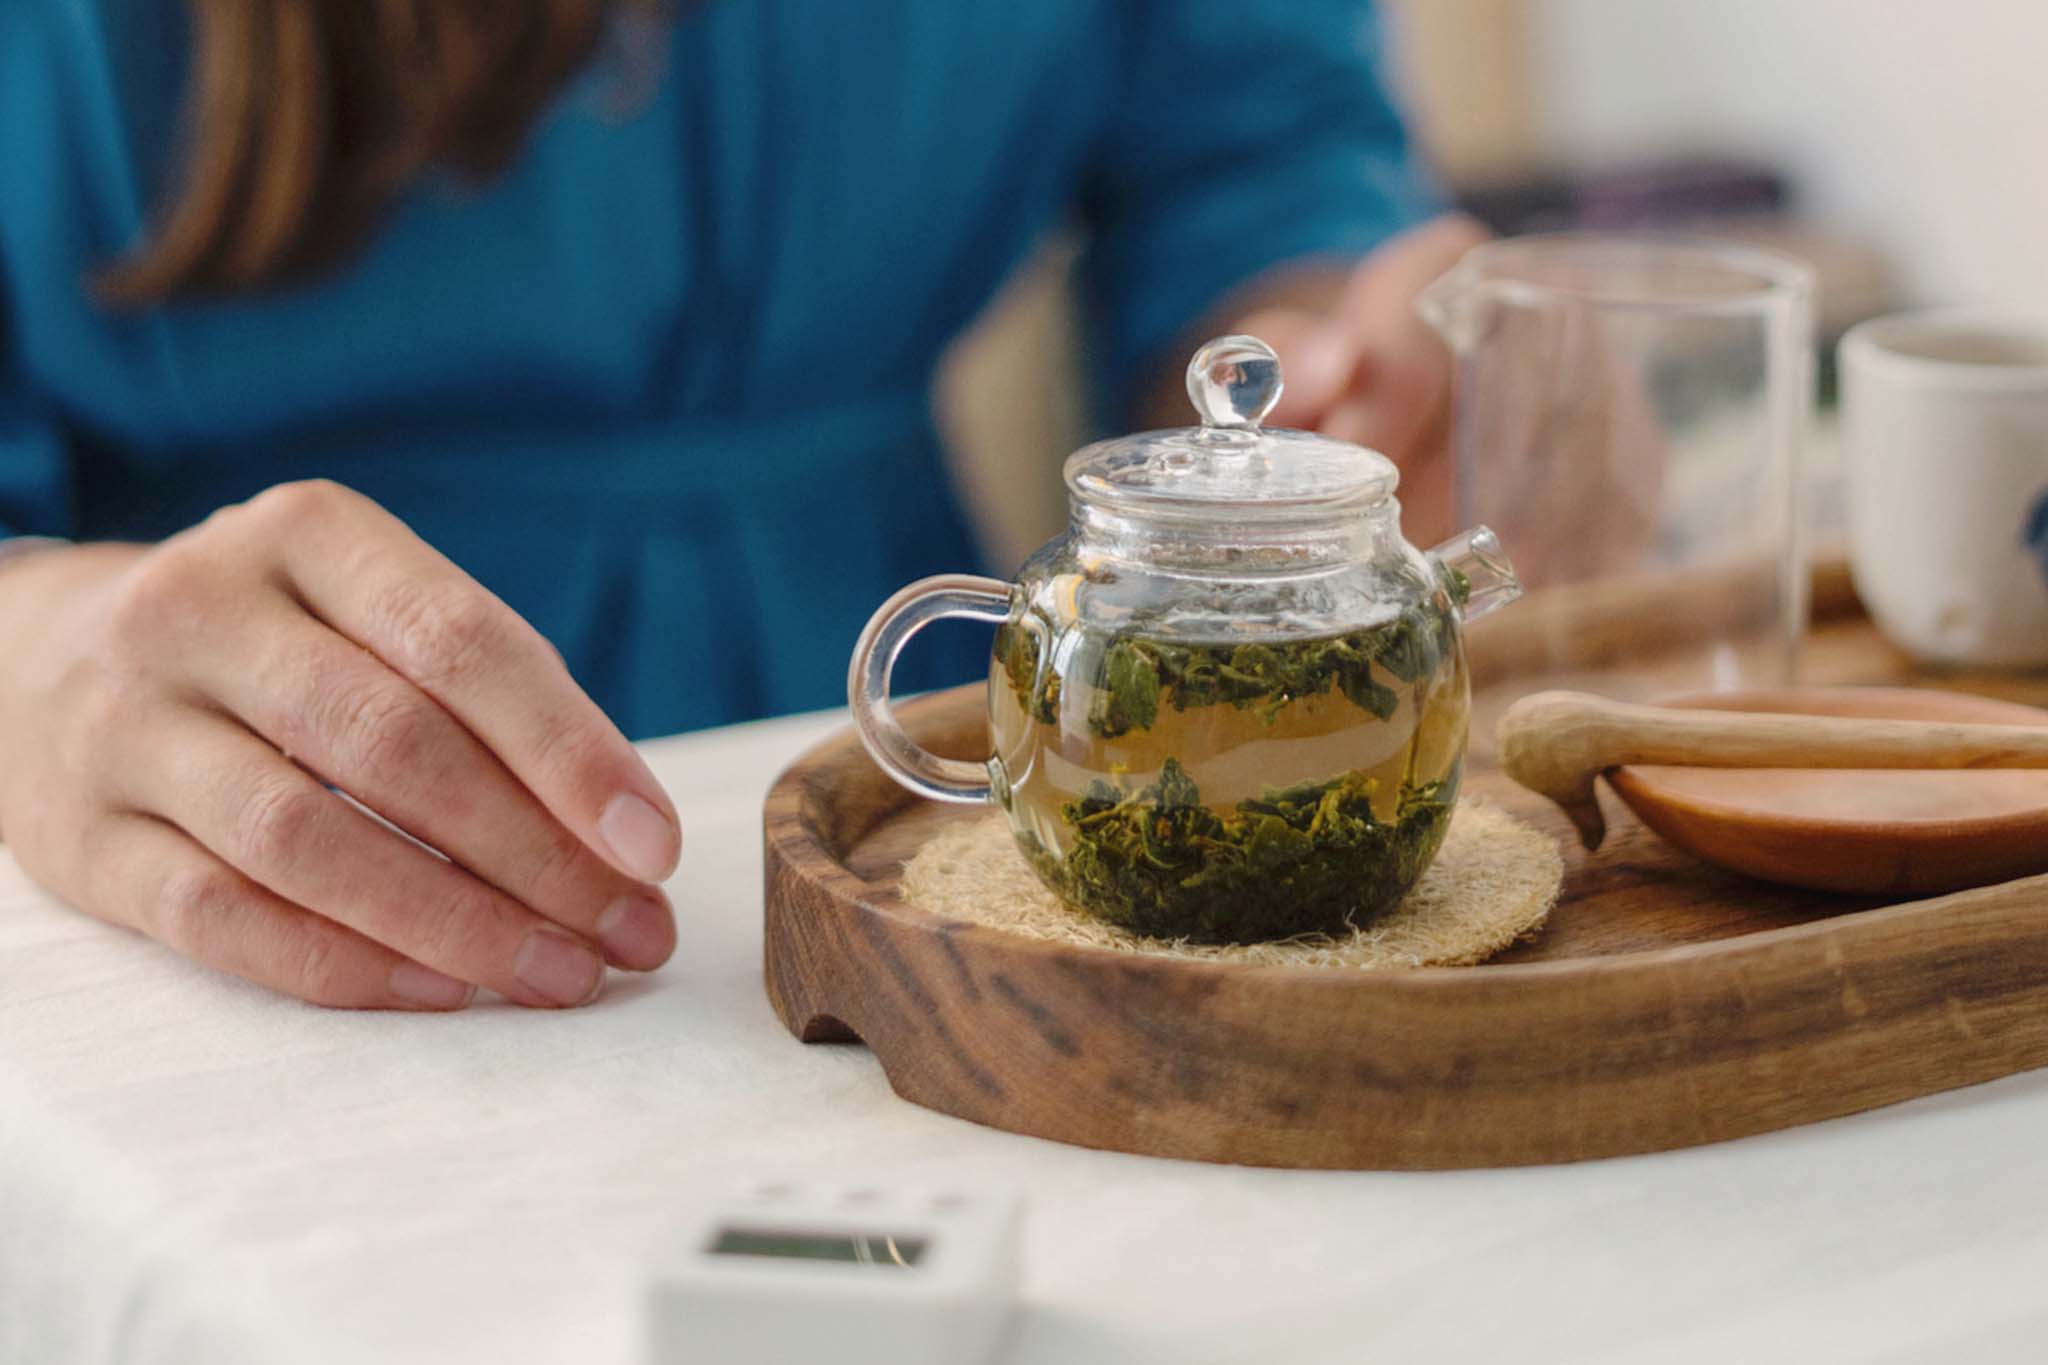 Rami Tea serving tray and green tea leaves